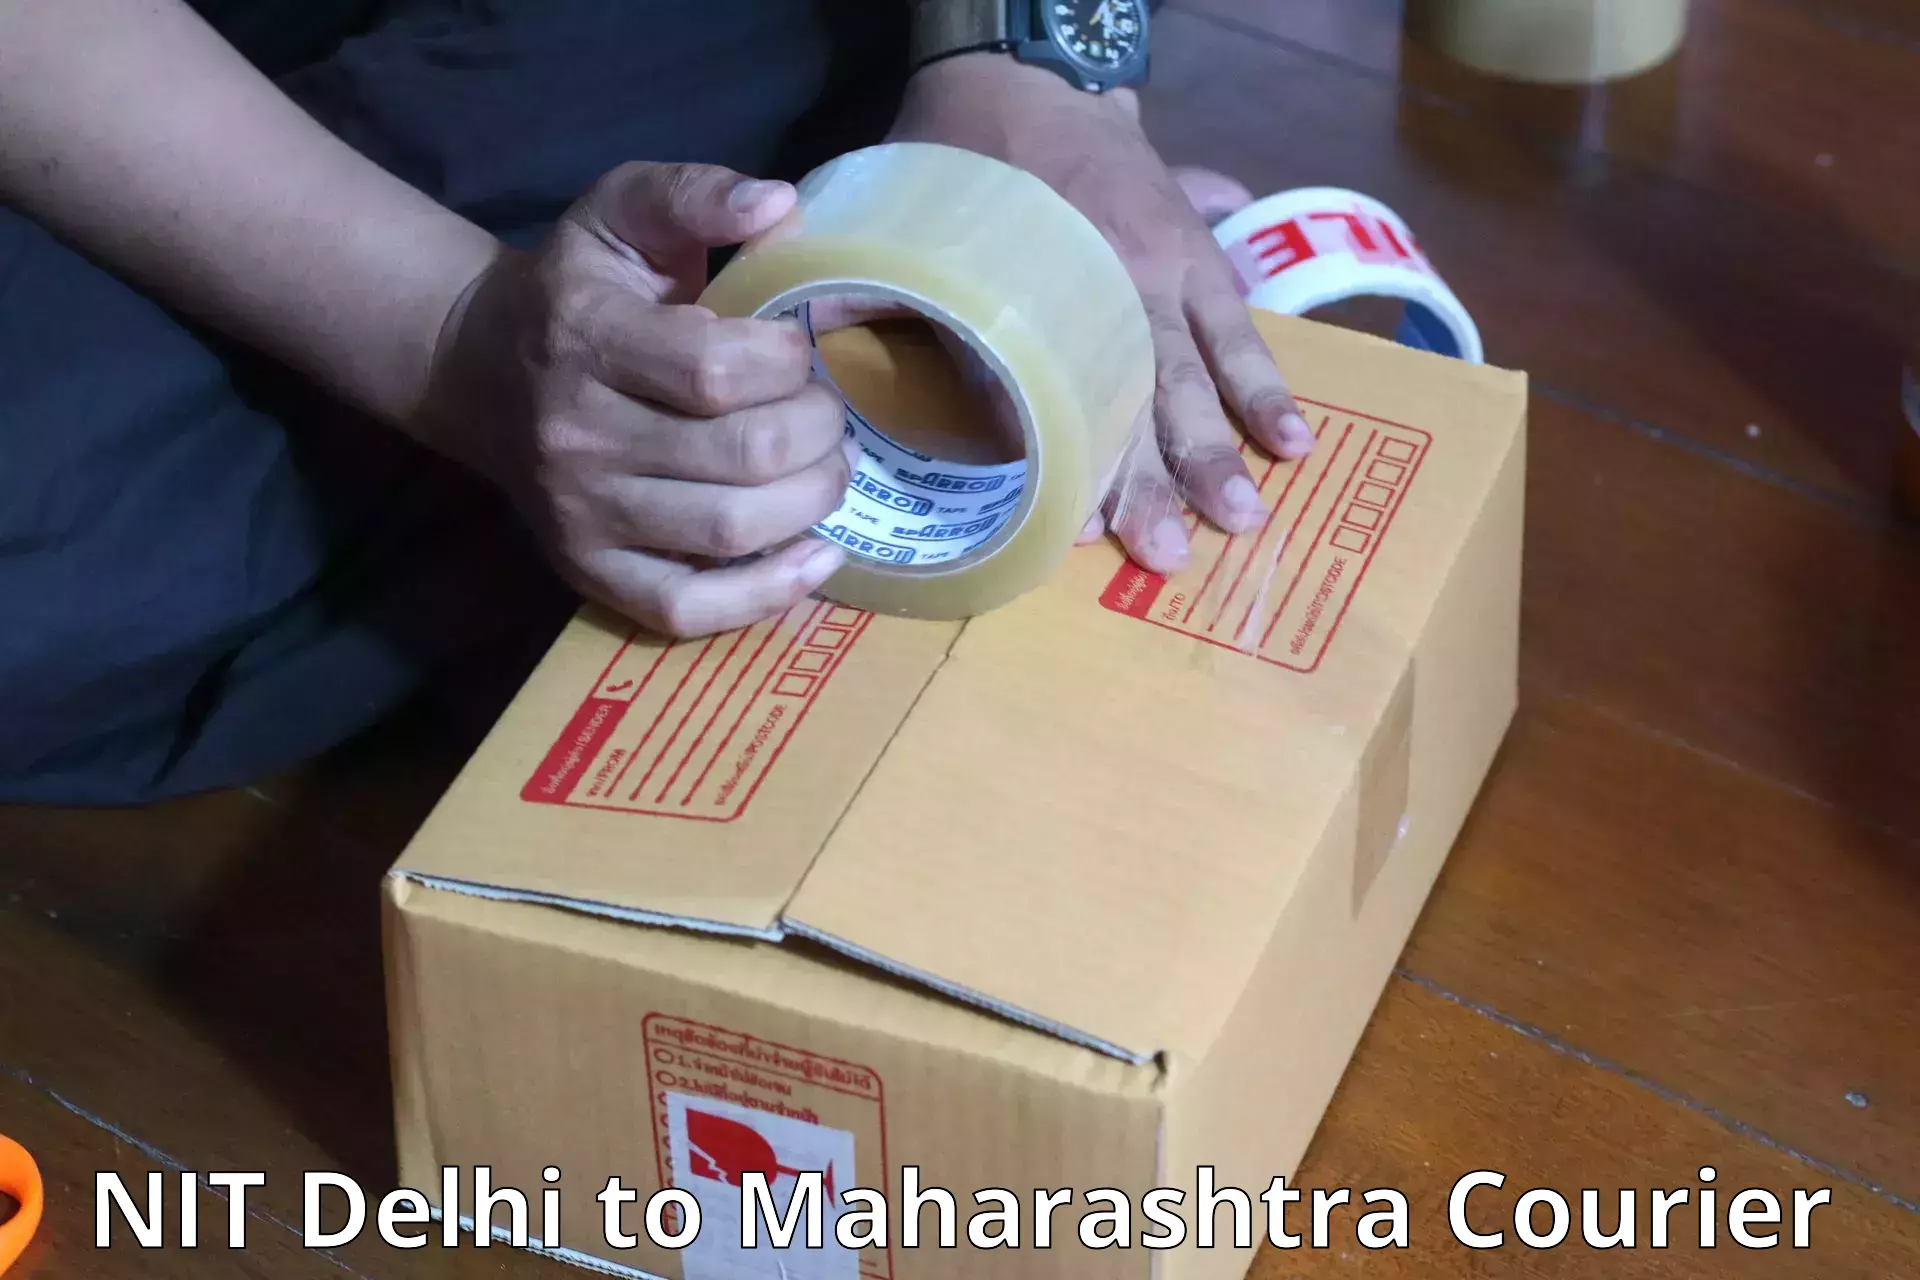 Baggage relocation service NIT Delhi to Maharashtra